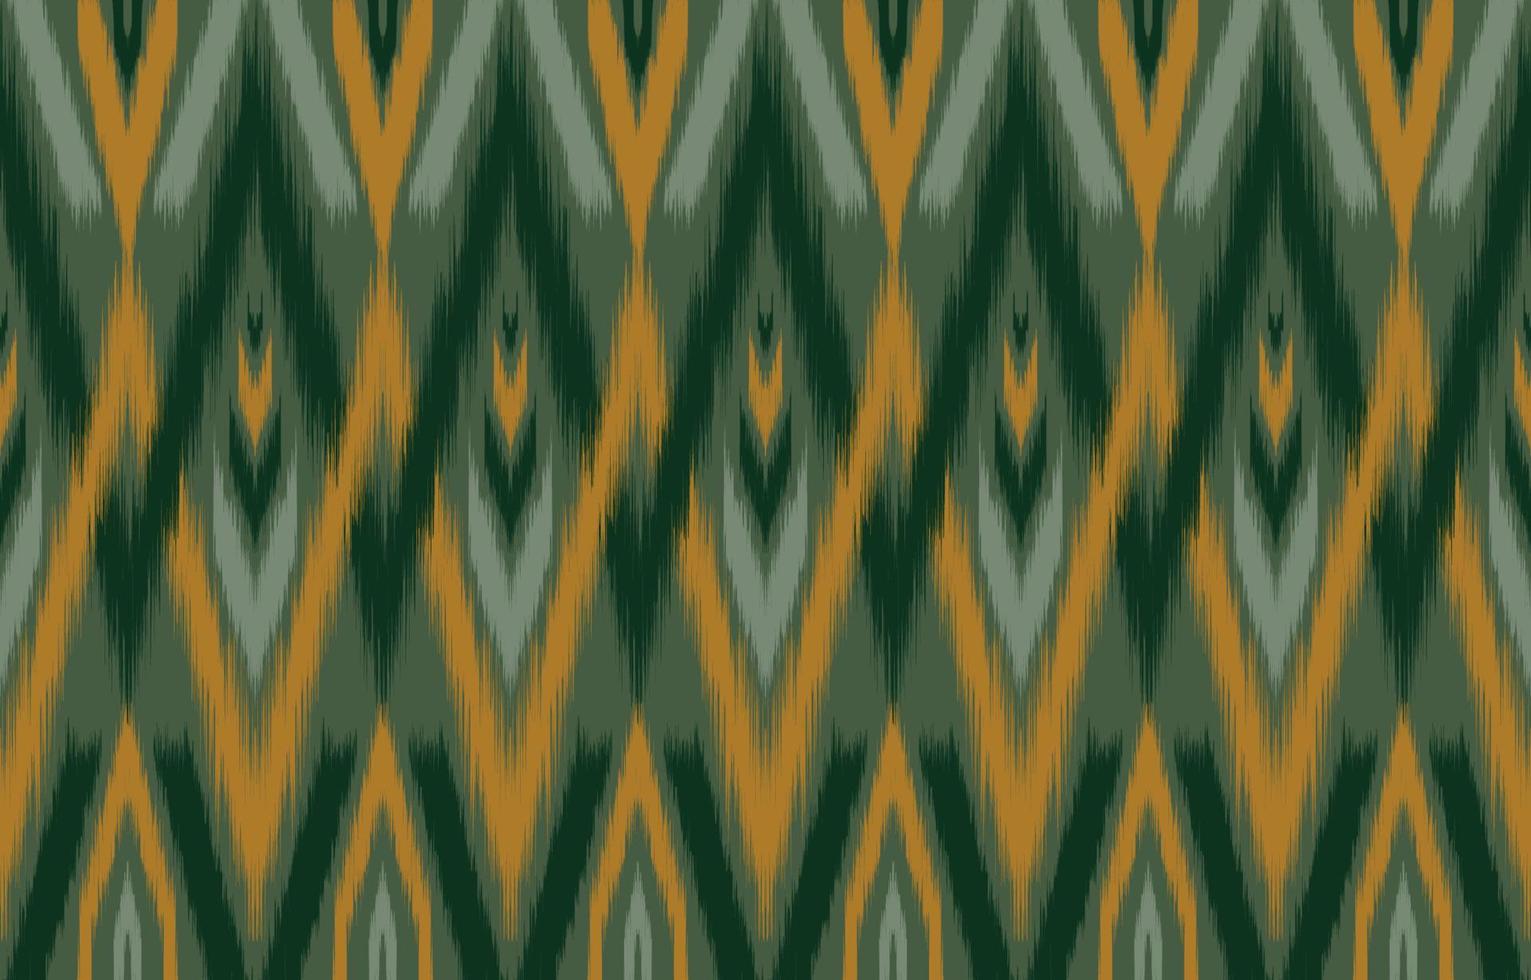 Ethnic seamless pattern. Vector geometric Tribal African Indian traditional embroidery background. Bohemian fashion. Ikat fabric carpet batik ornament chevron textile decoration wallpaper boho style